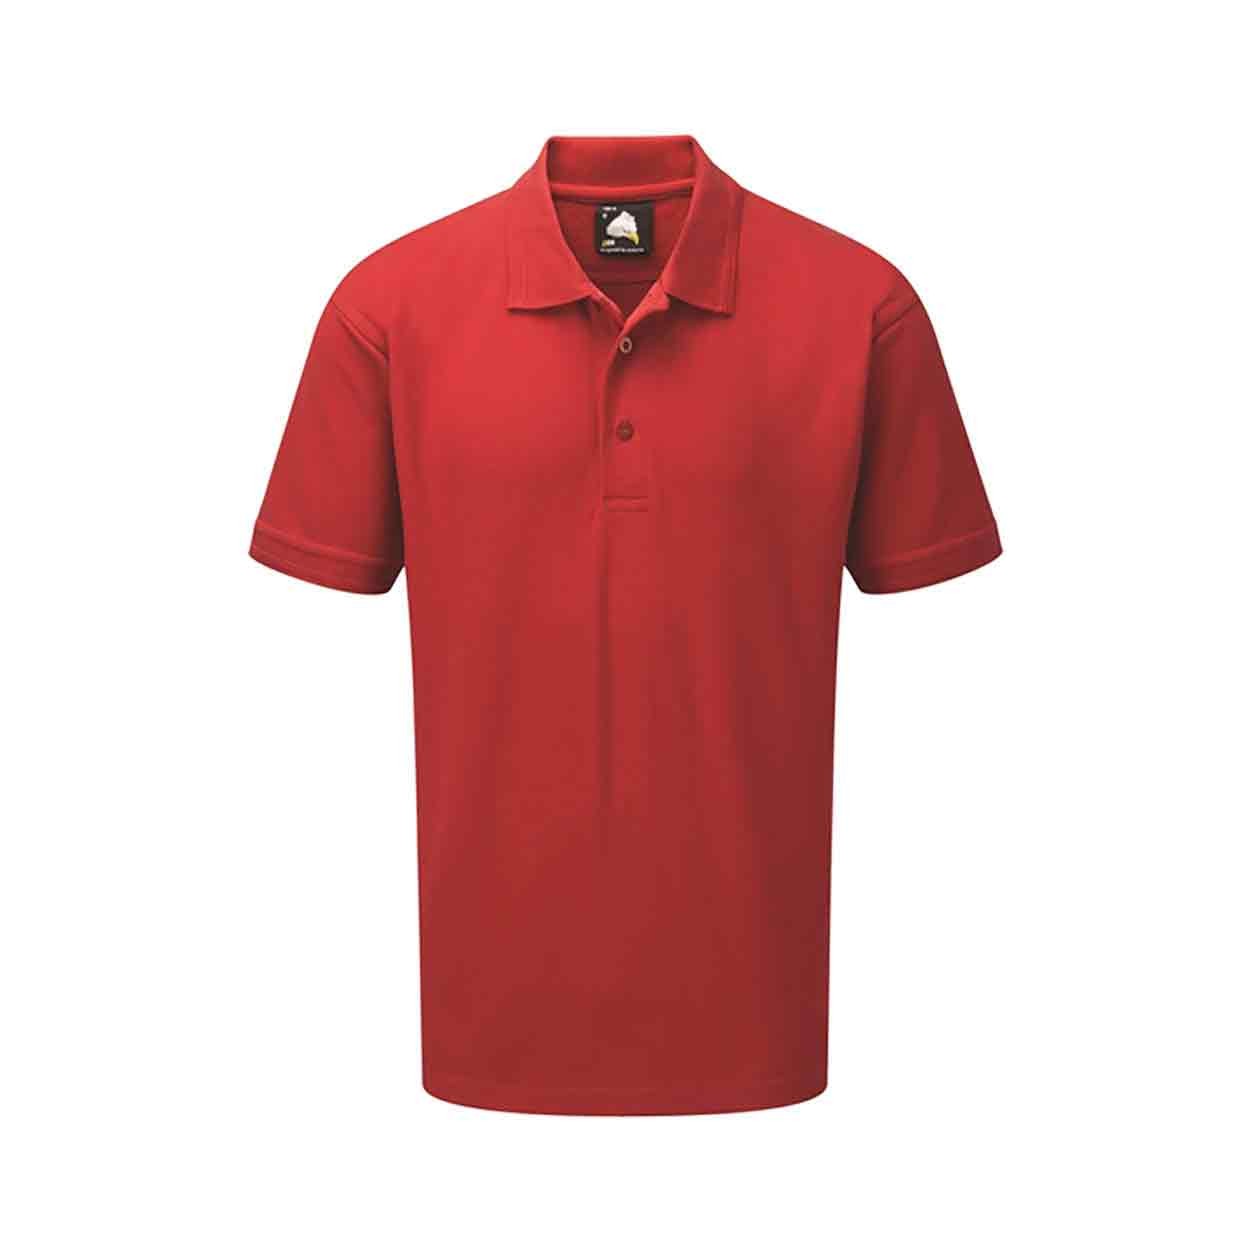 Workwear High - / Shirts Shirts - PolyCotton Oriole - Shirts Orn Best 1190 - - Workwear Polo Leisurewear Poloshirt Performance Shirts Polo Polo Polo Polyester - Mens